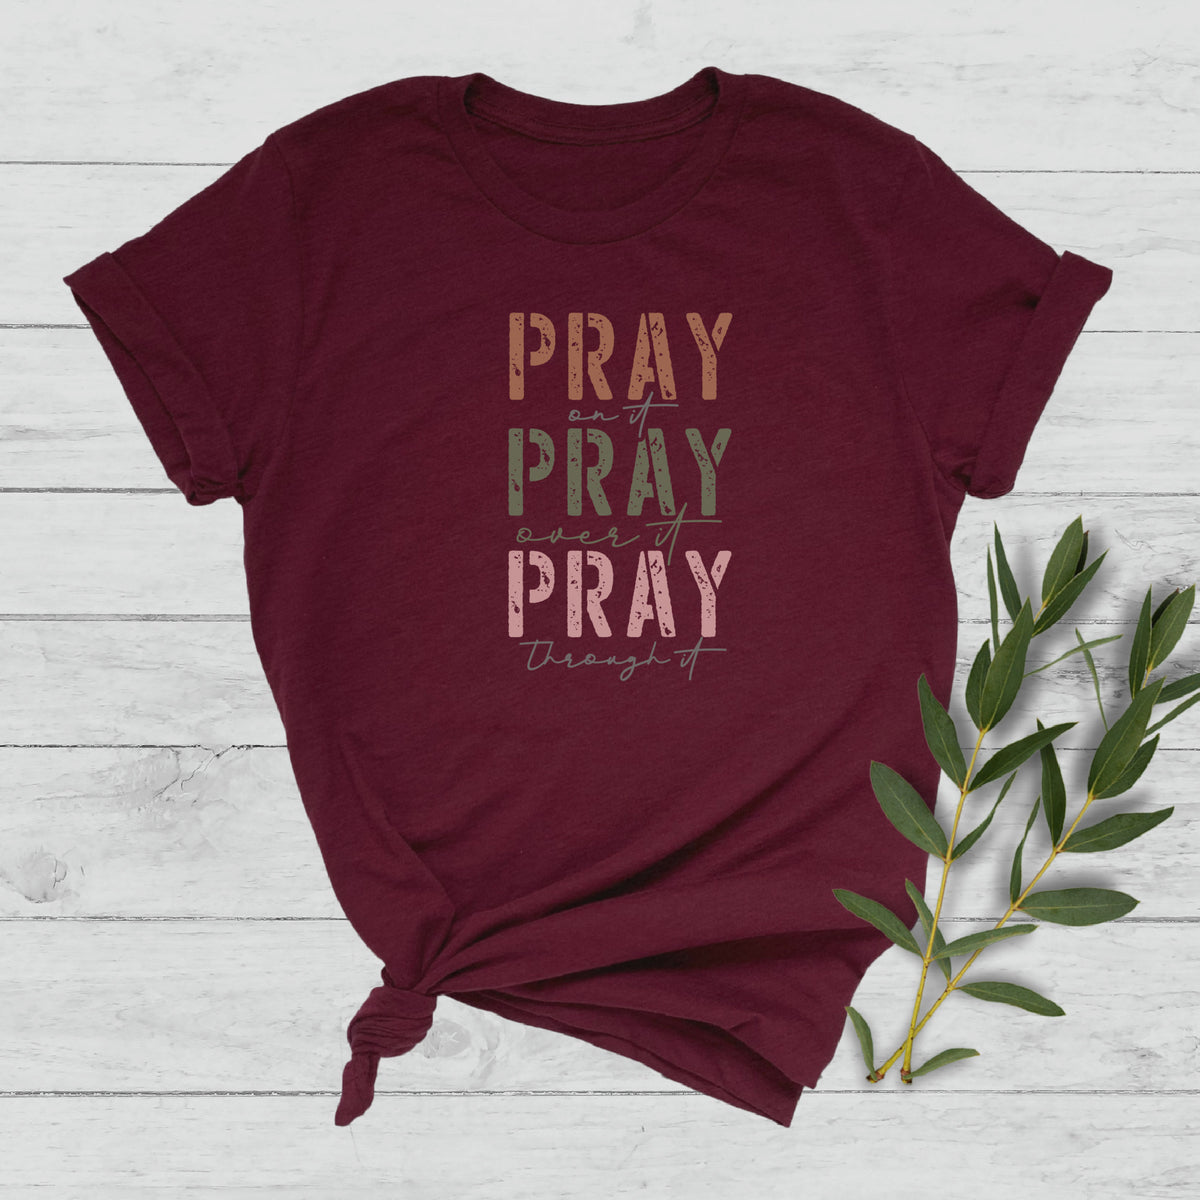 Pray On It, Over It, Through It - Women's Christian T-Shirt